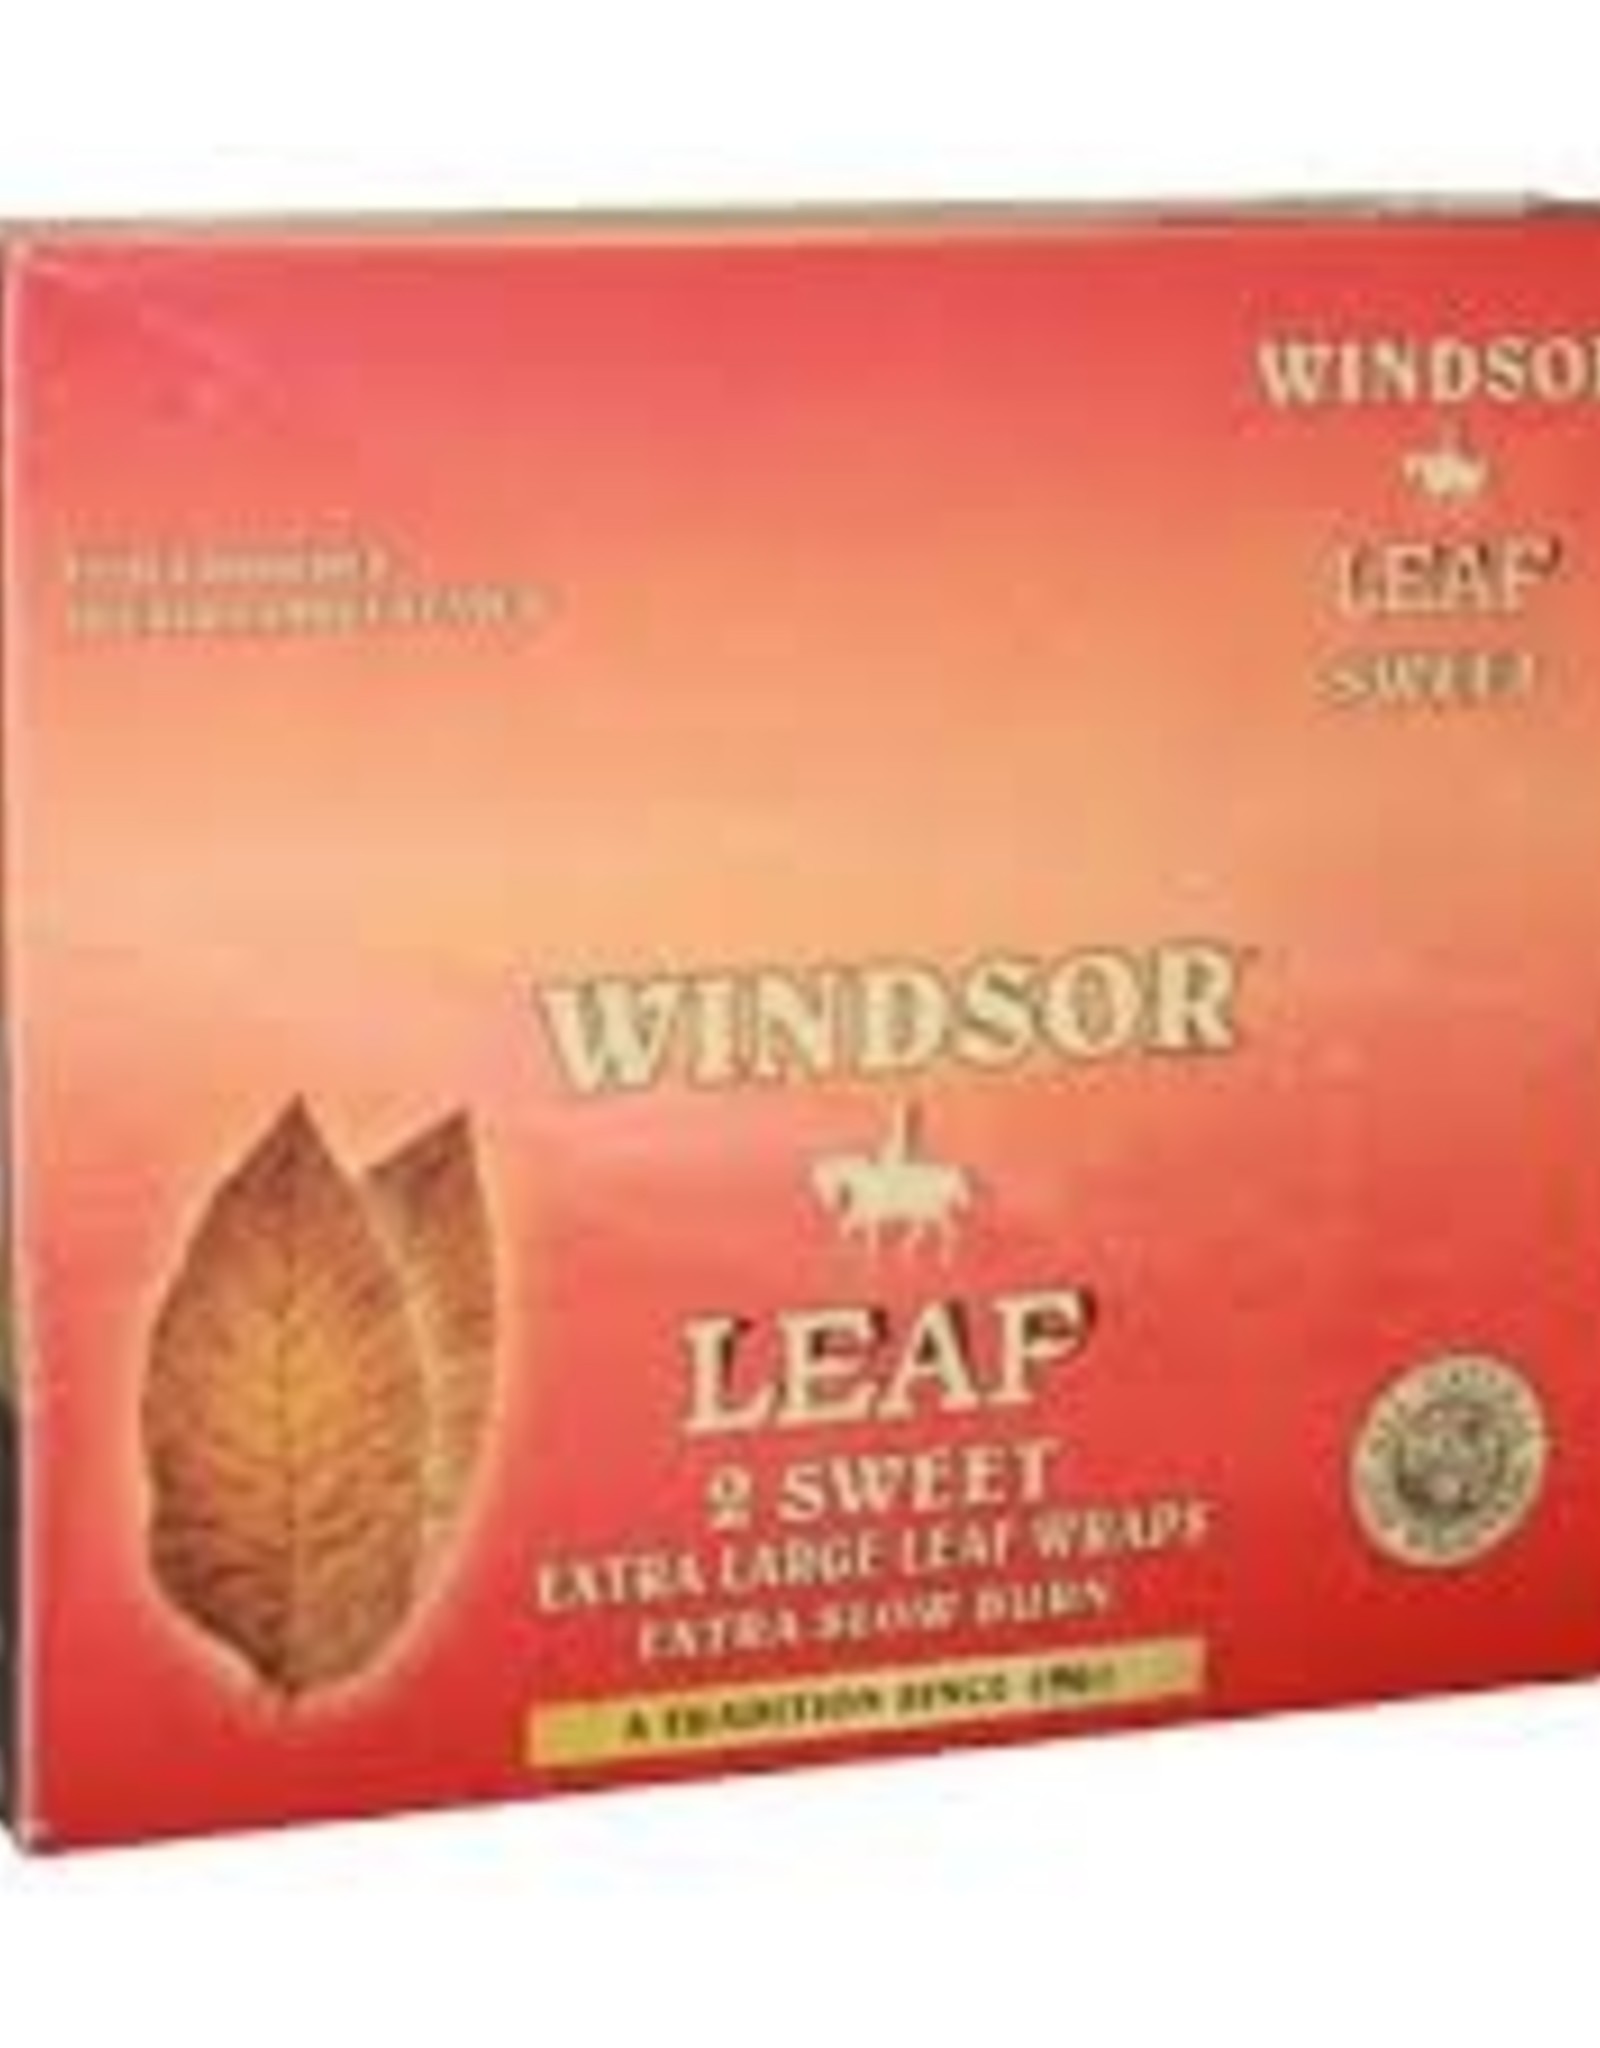 Good Times Windsor Leaf Sweet Wraps